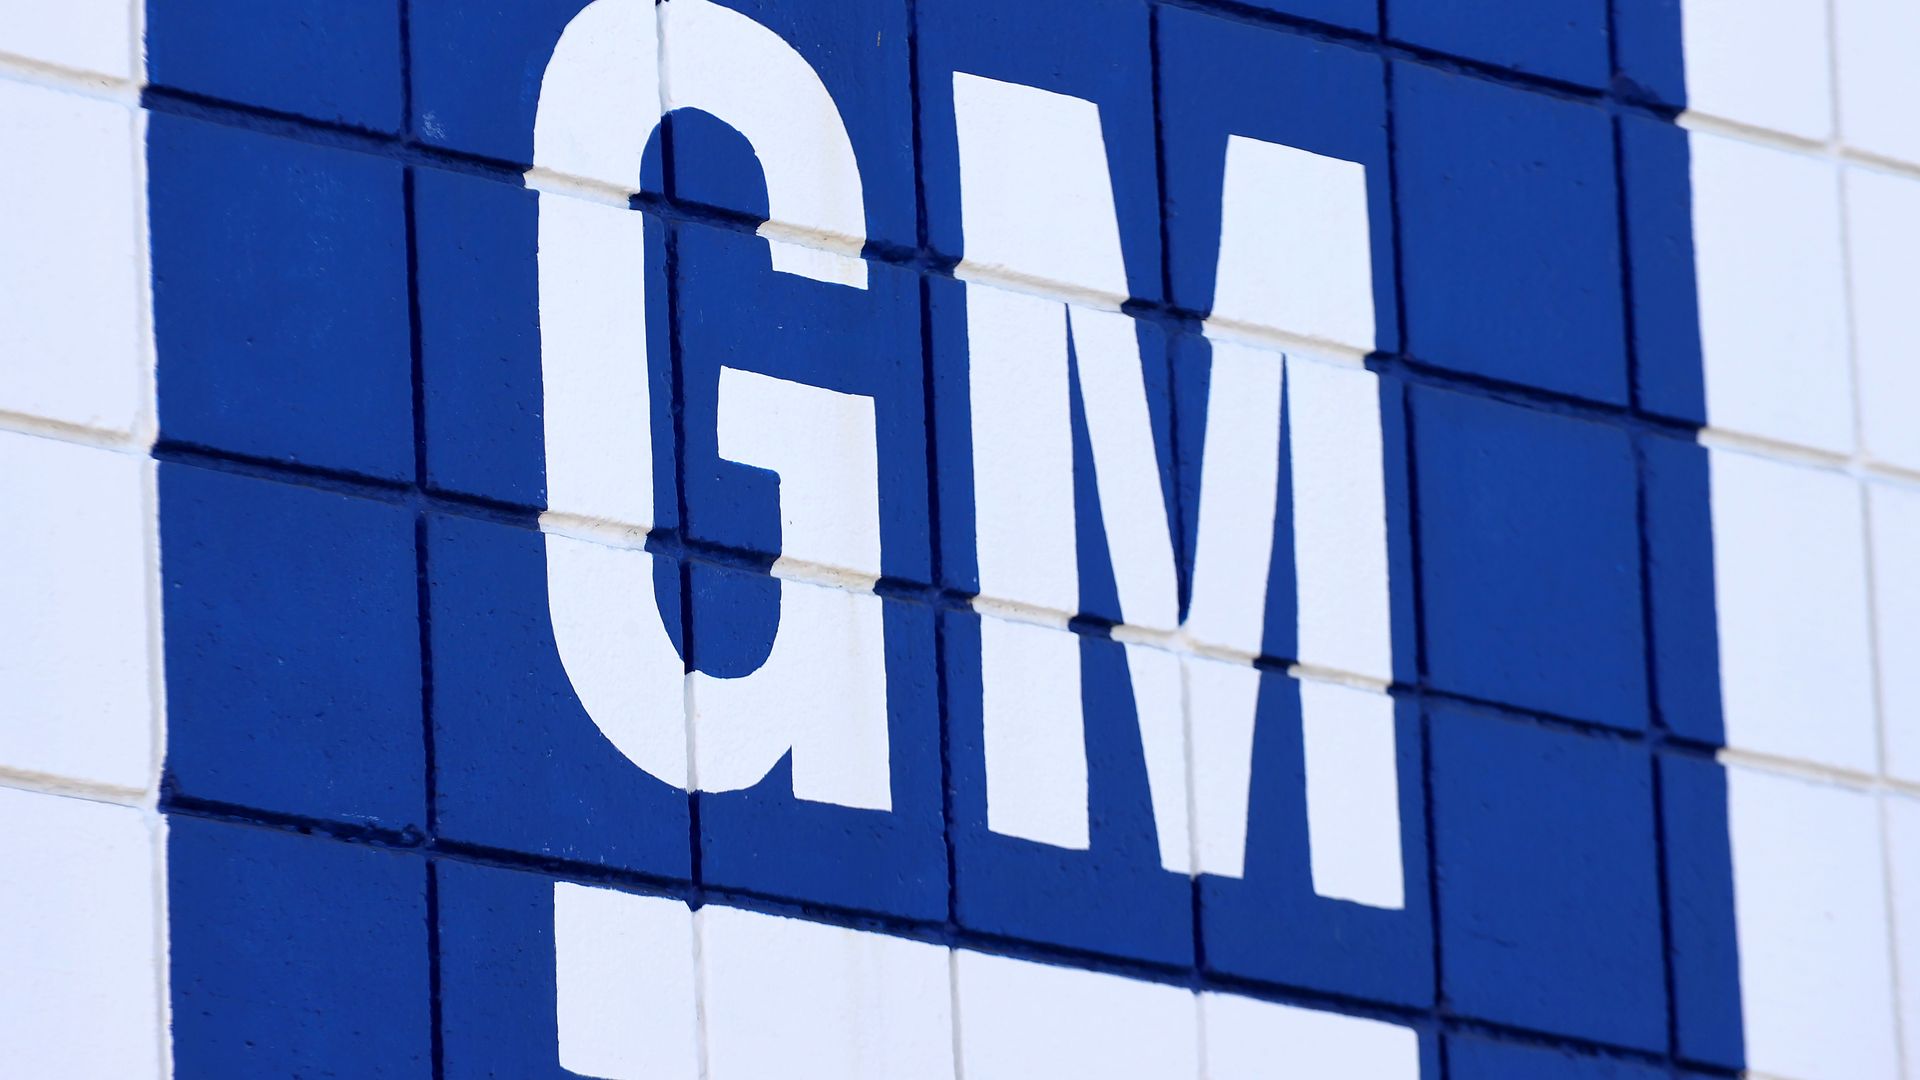 The General Motors logo is displayed at a Chevrolet dealership.